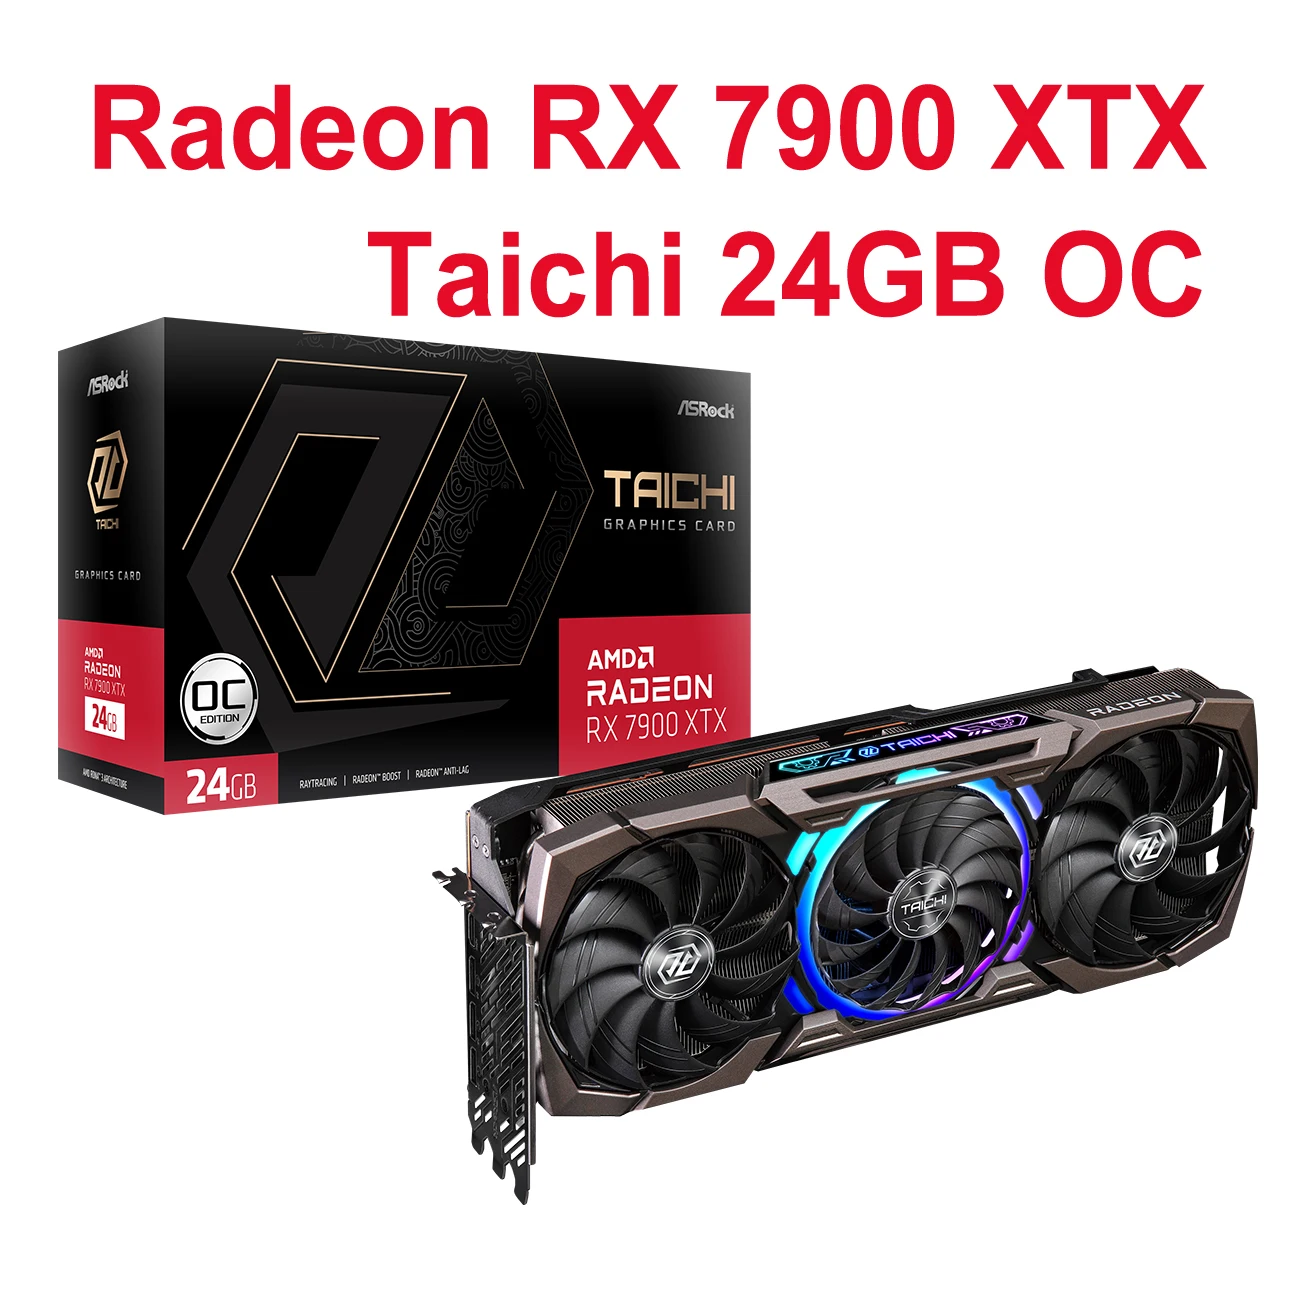 

ASrock New AMD Radeon RX 7900 XTX Taichi 24GB OC Graphic Card Gaming GPU RGB placa de video Video Cards 384-Bit super deal